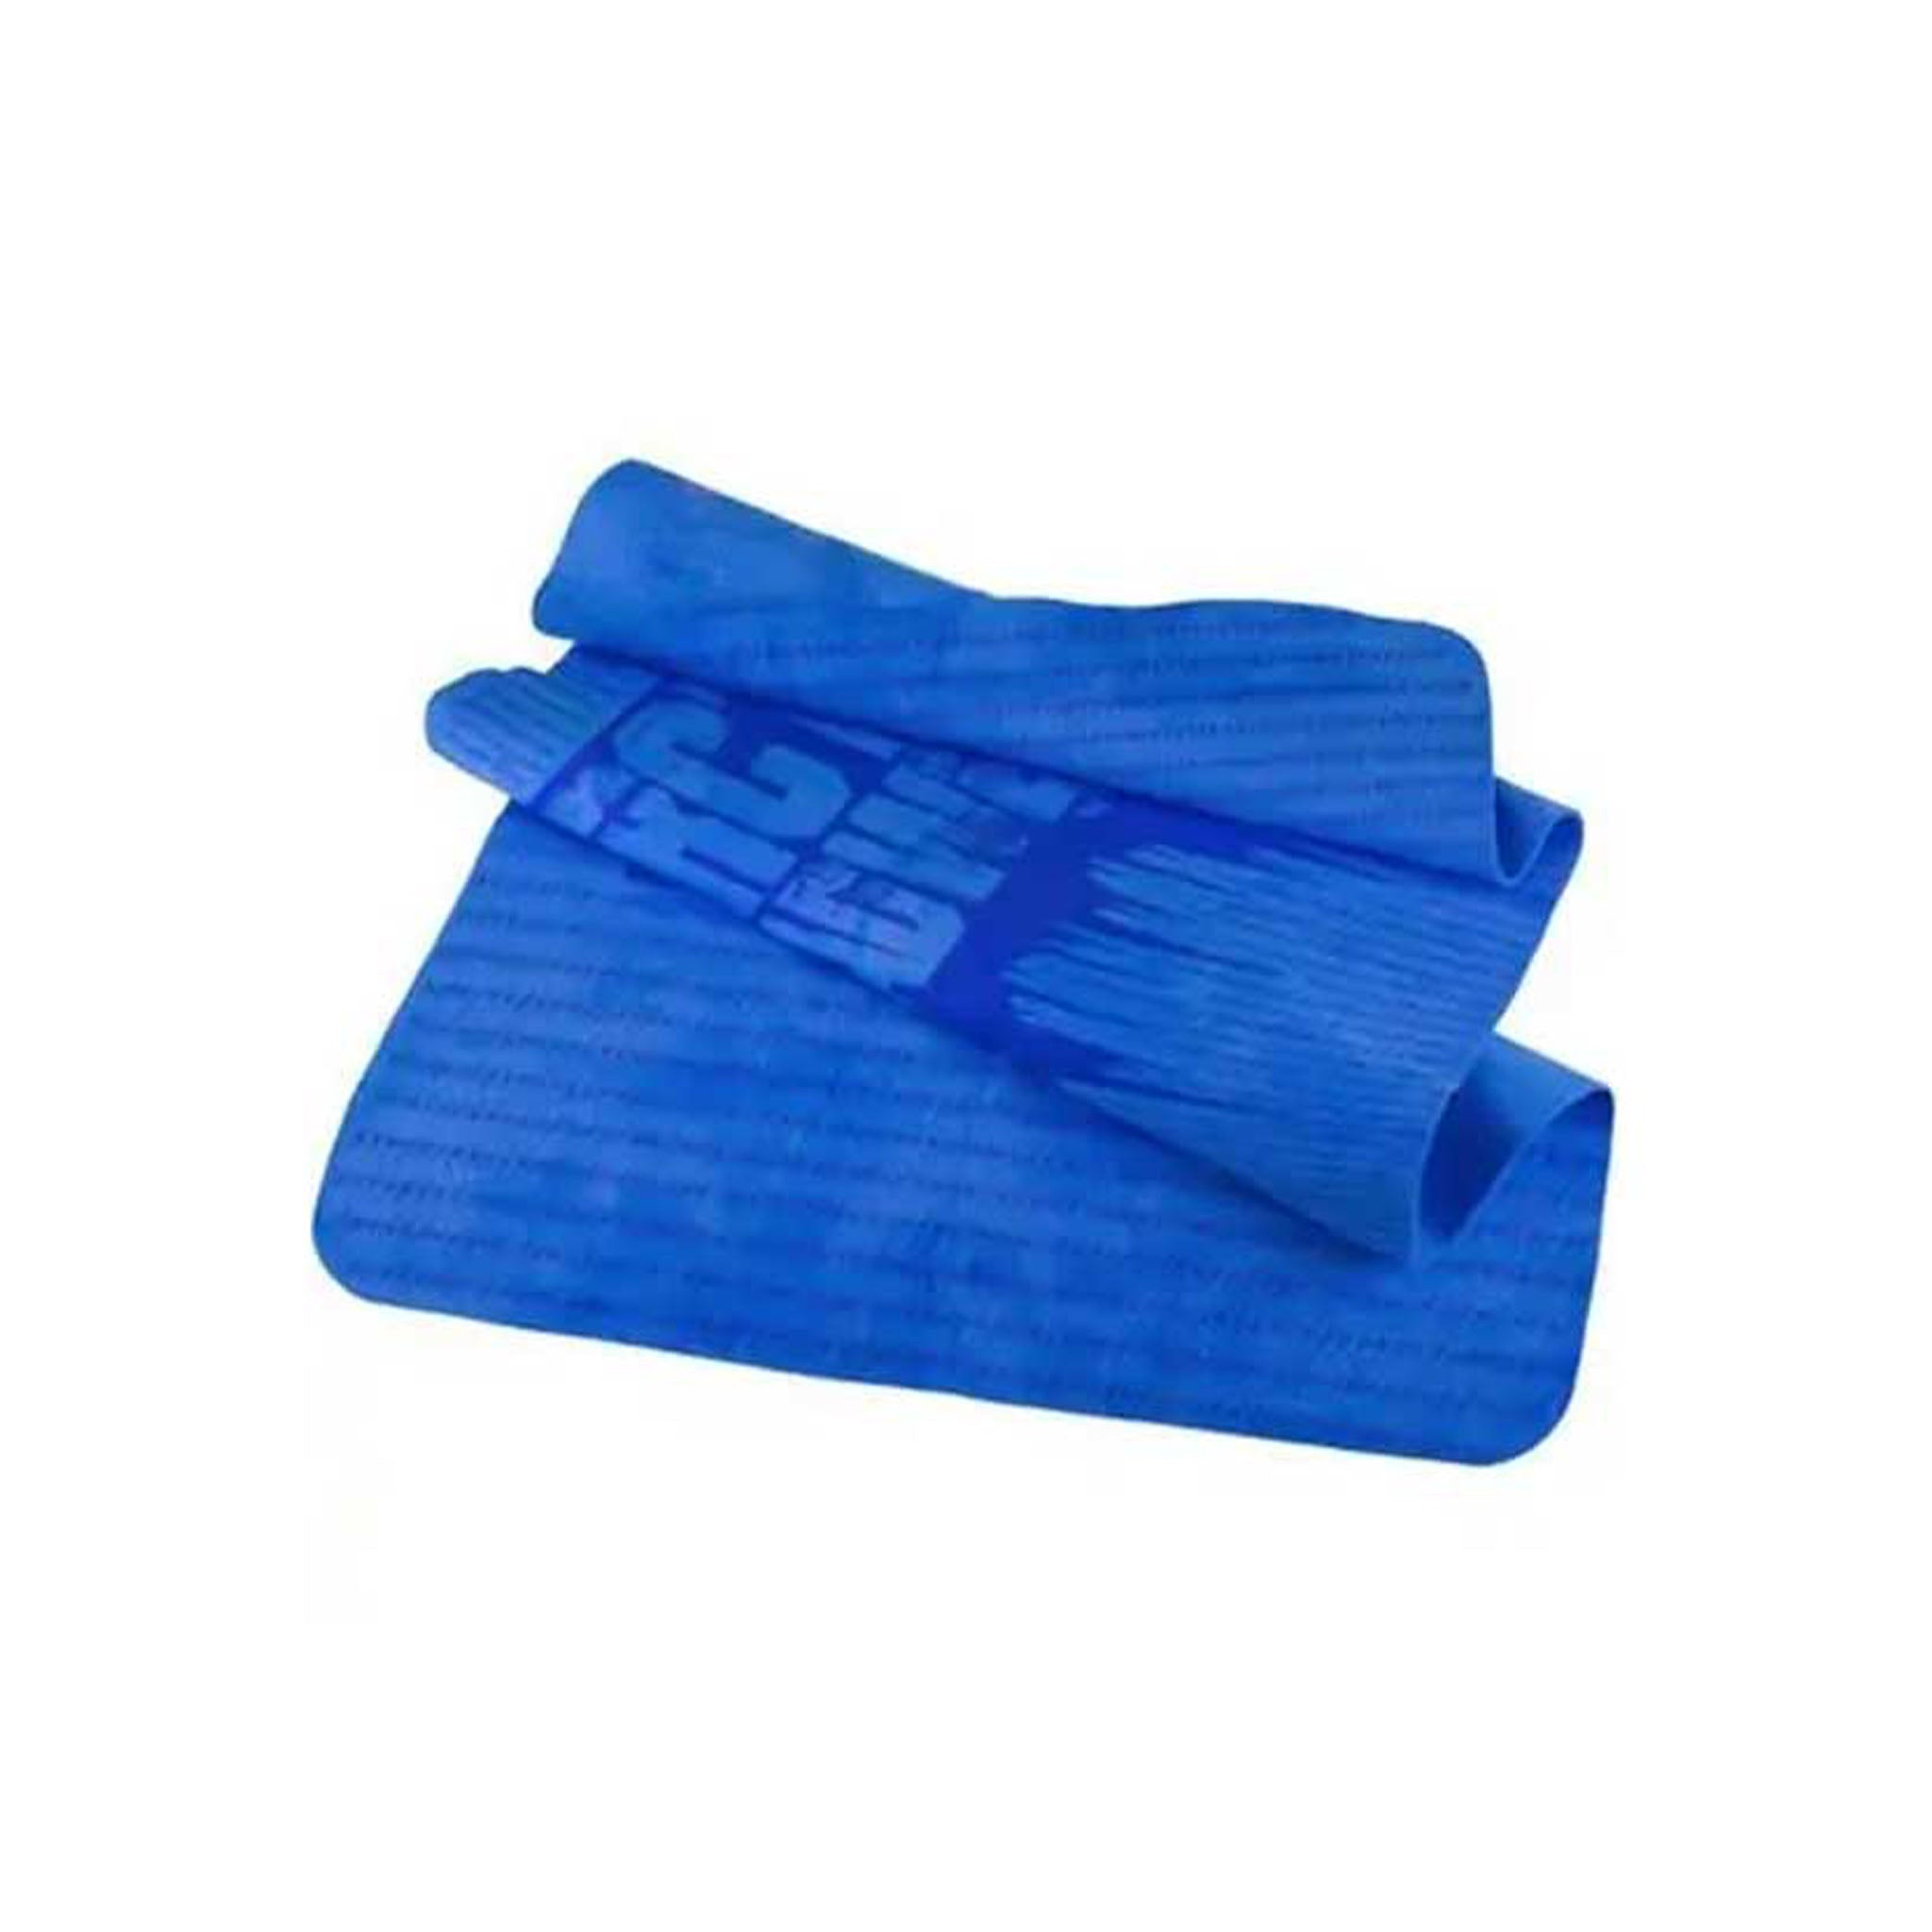 Artic Radwear Blue Cooling Towels